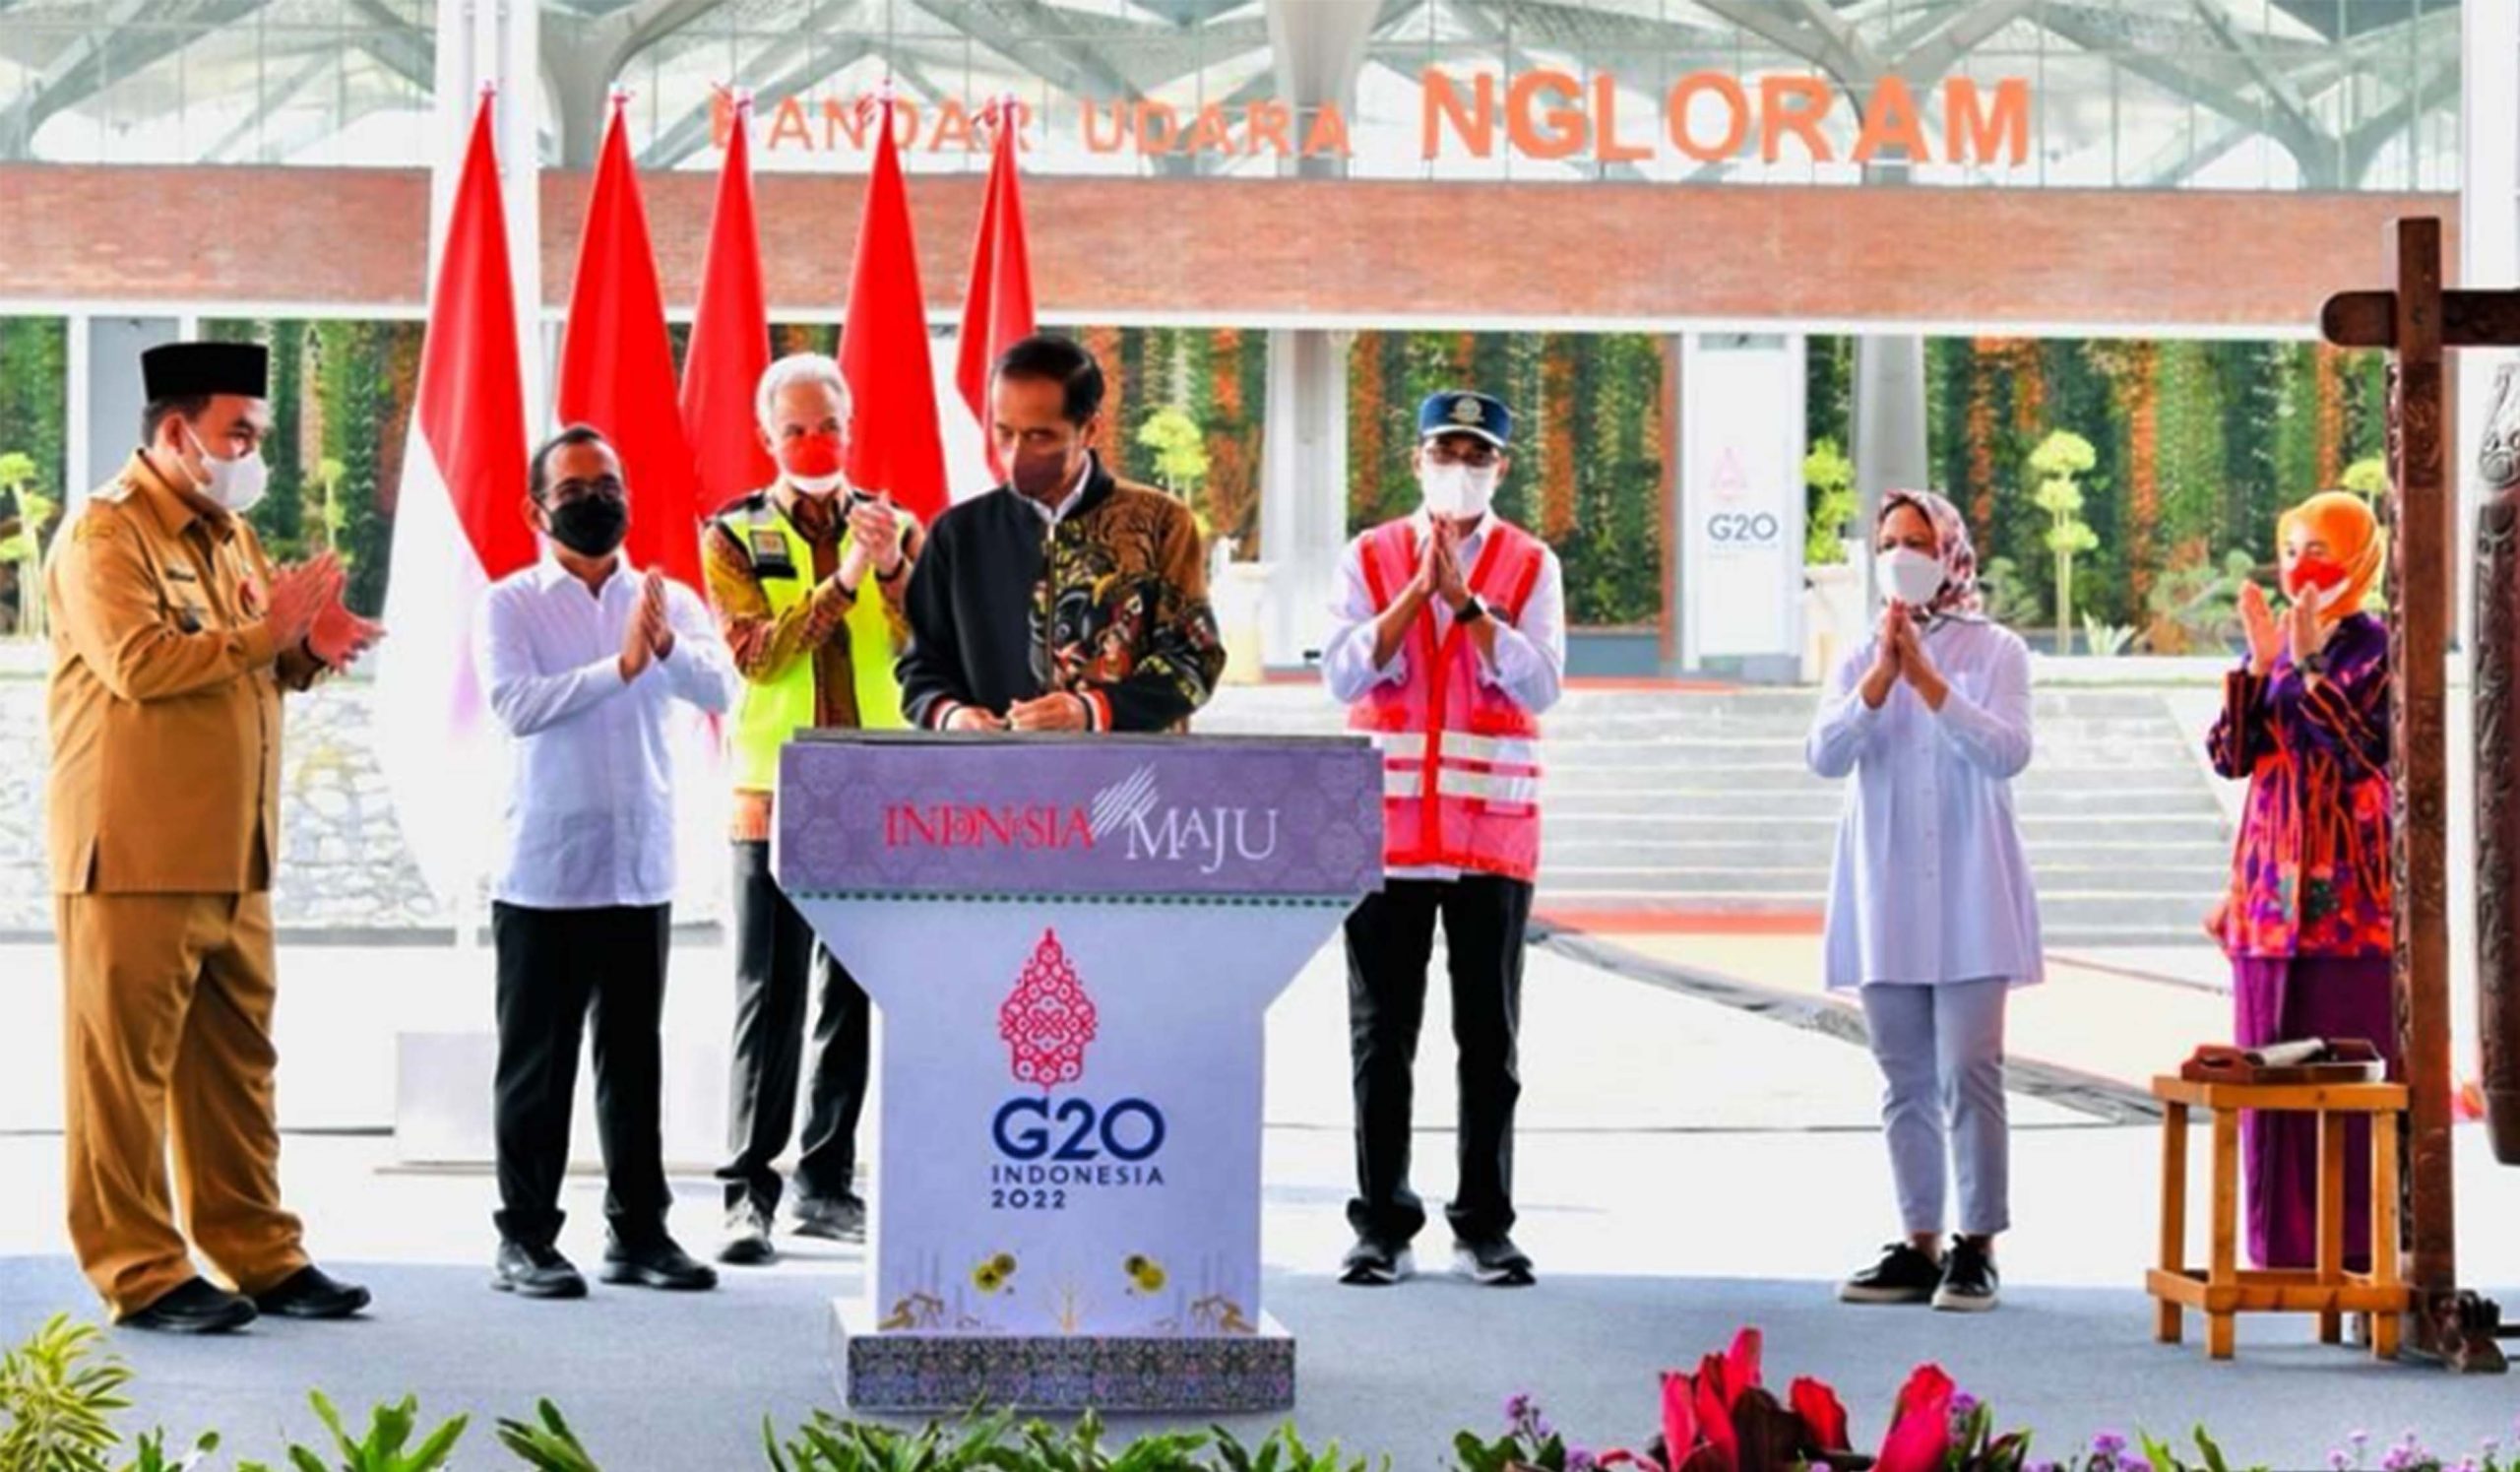 Presiden Joko Widodo bersama Ibu Iriana Joko Widodo meninjau sekaligus meresmikan Bandar Udara Ngloram, Kabupaten Blora, Jawa Tengah